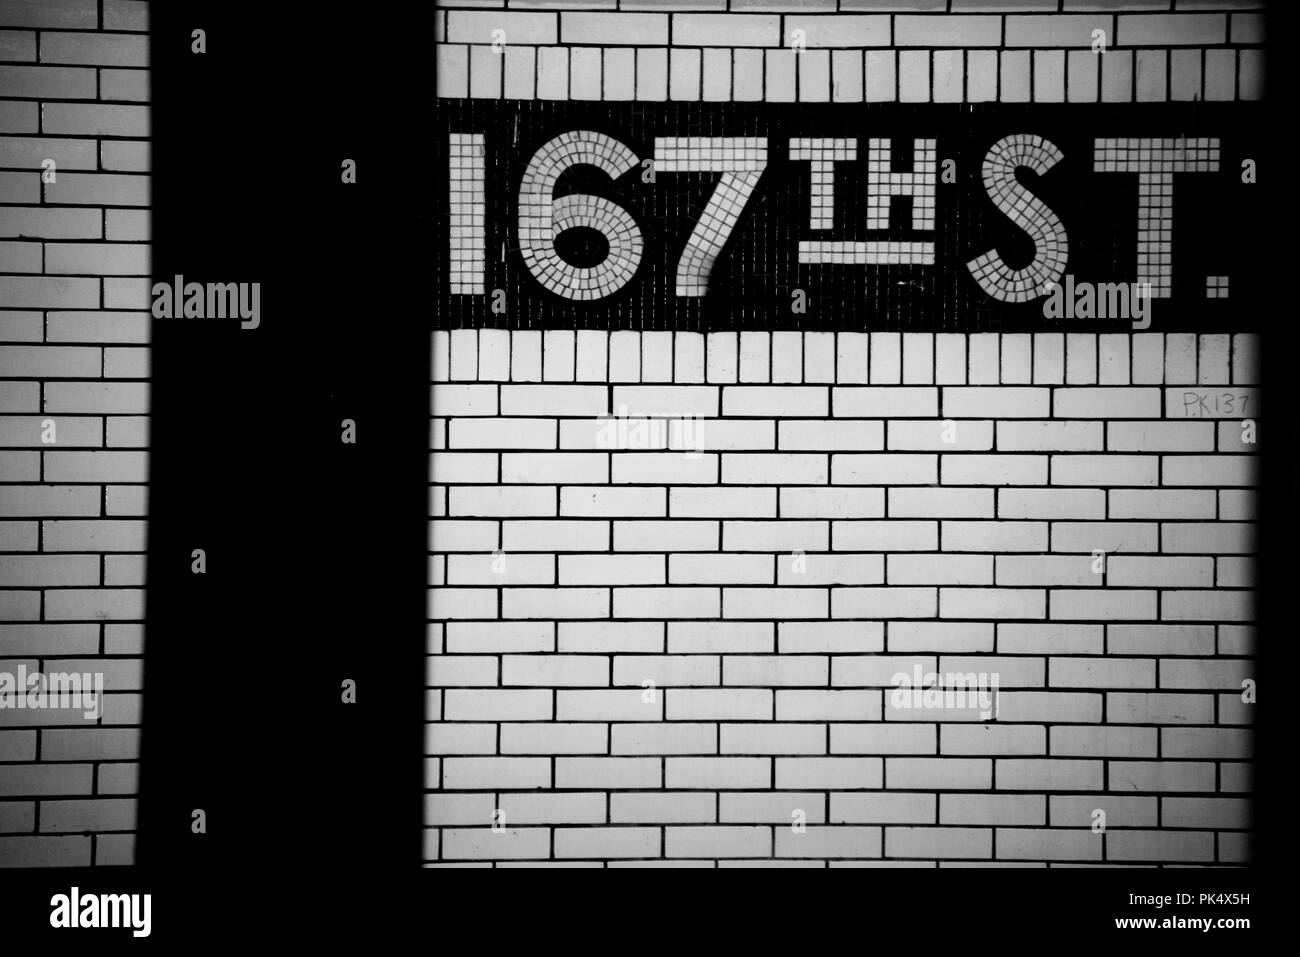 167th Street Subway NYC Stock Photo